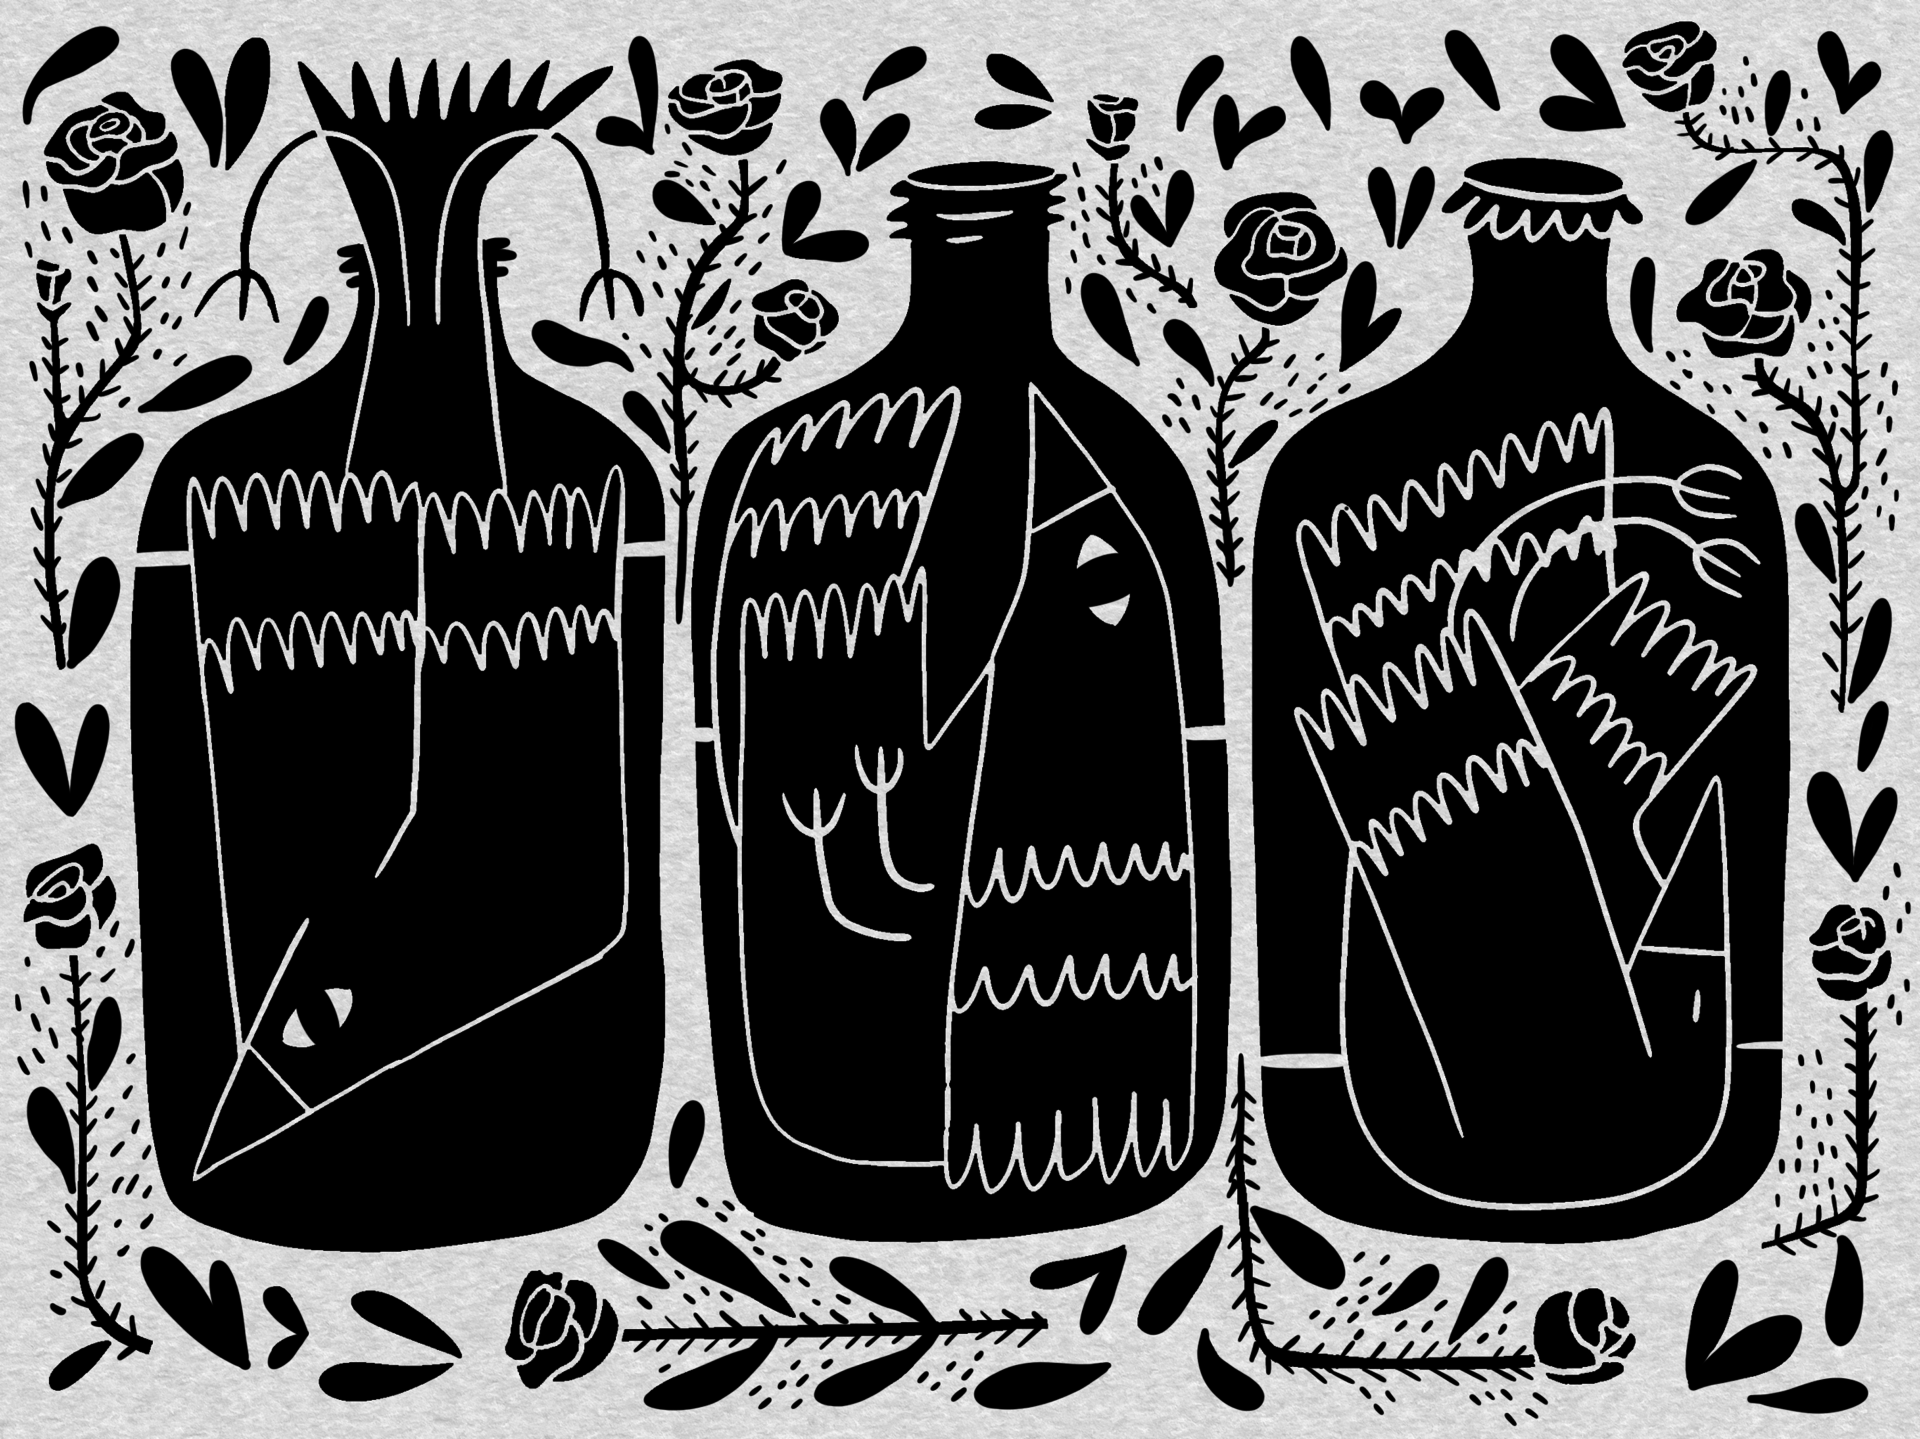 three black ravens inside three bottles